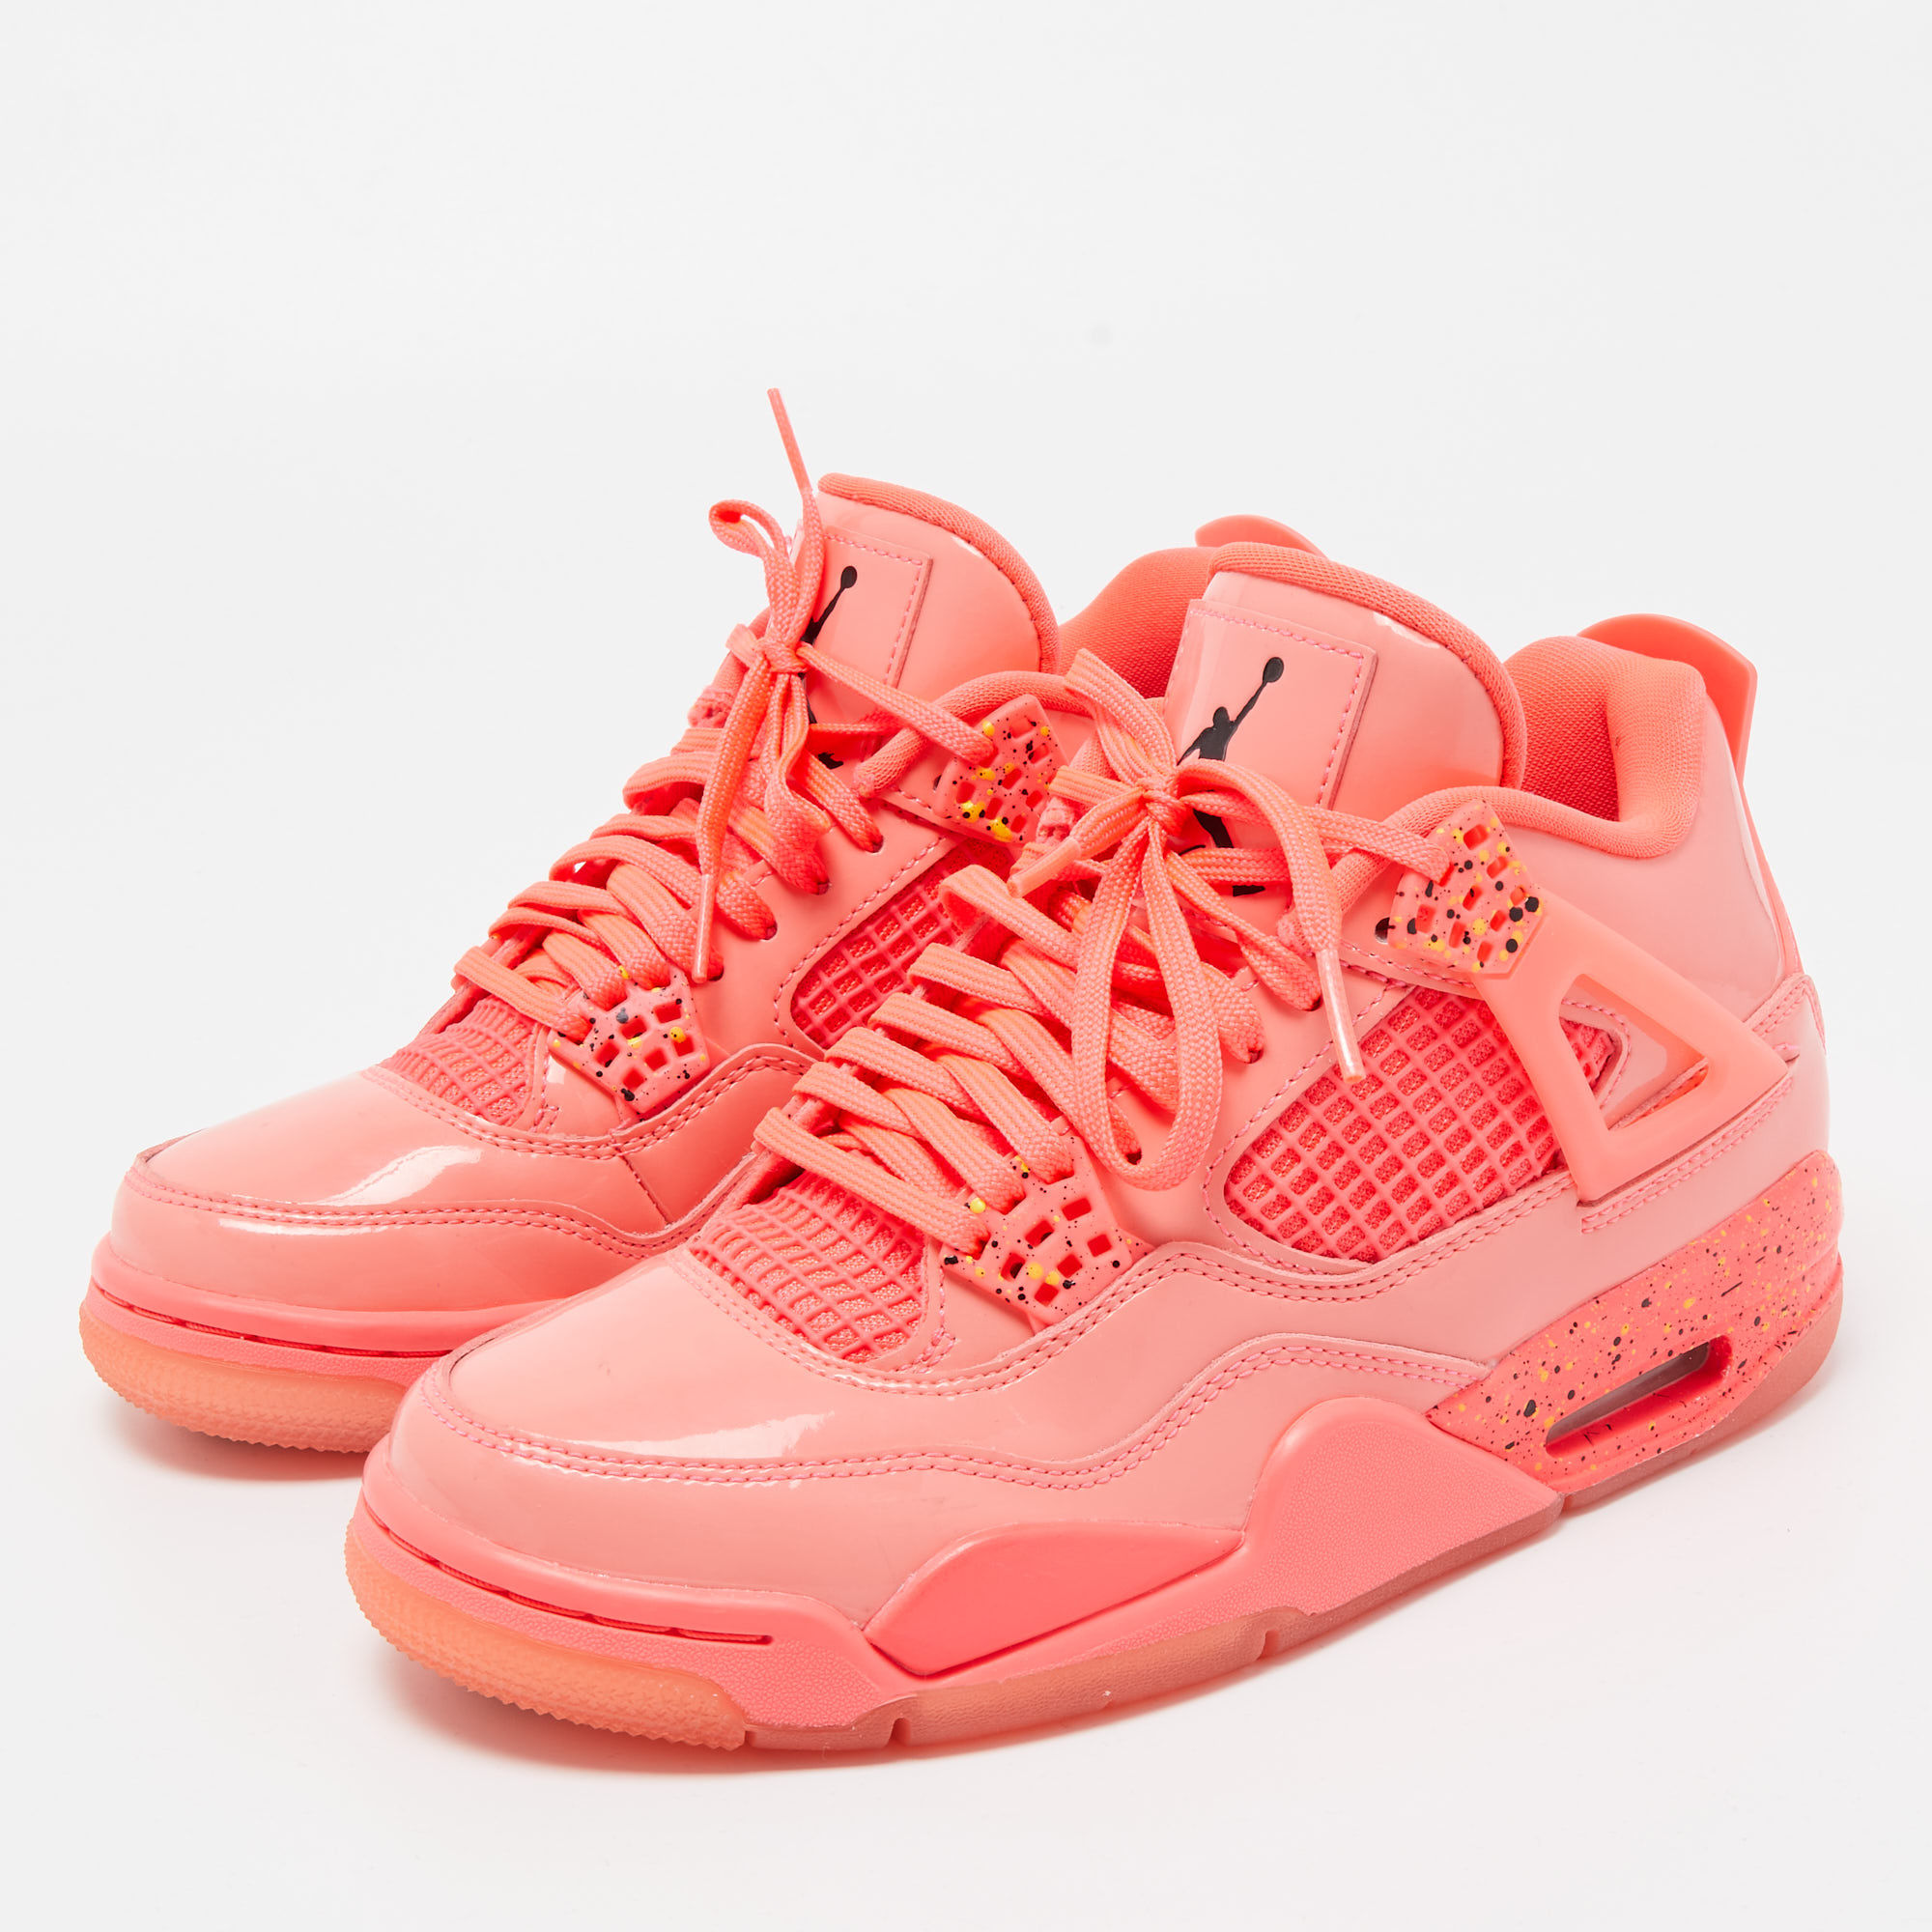 

Air Jordans Neon Pink Patent Leather Jordan 4 Hot Punch Sneakers Size